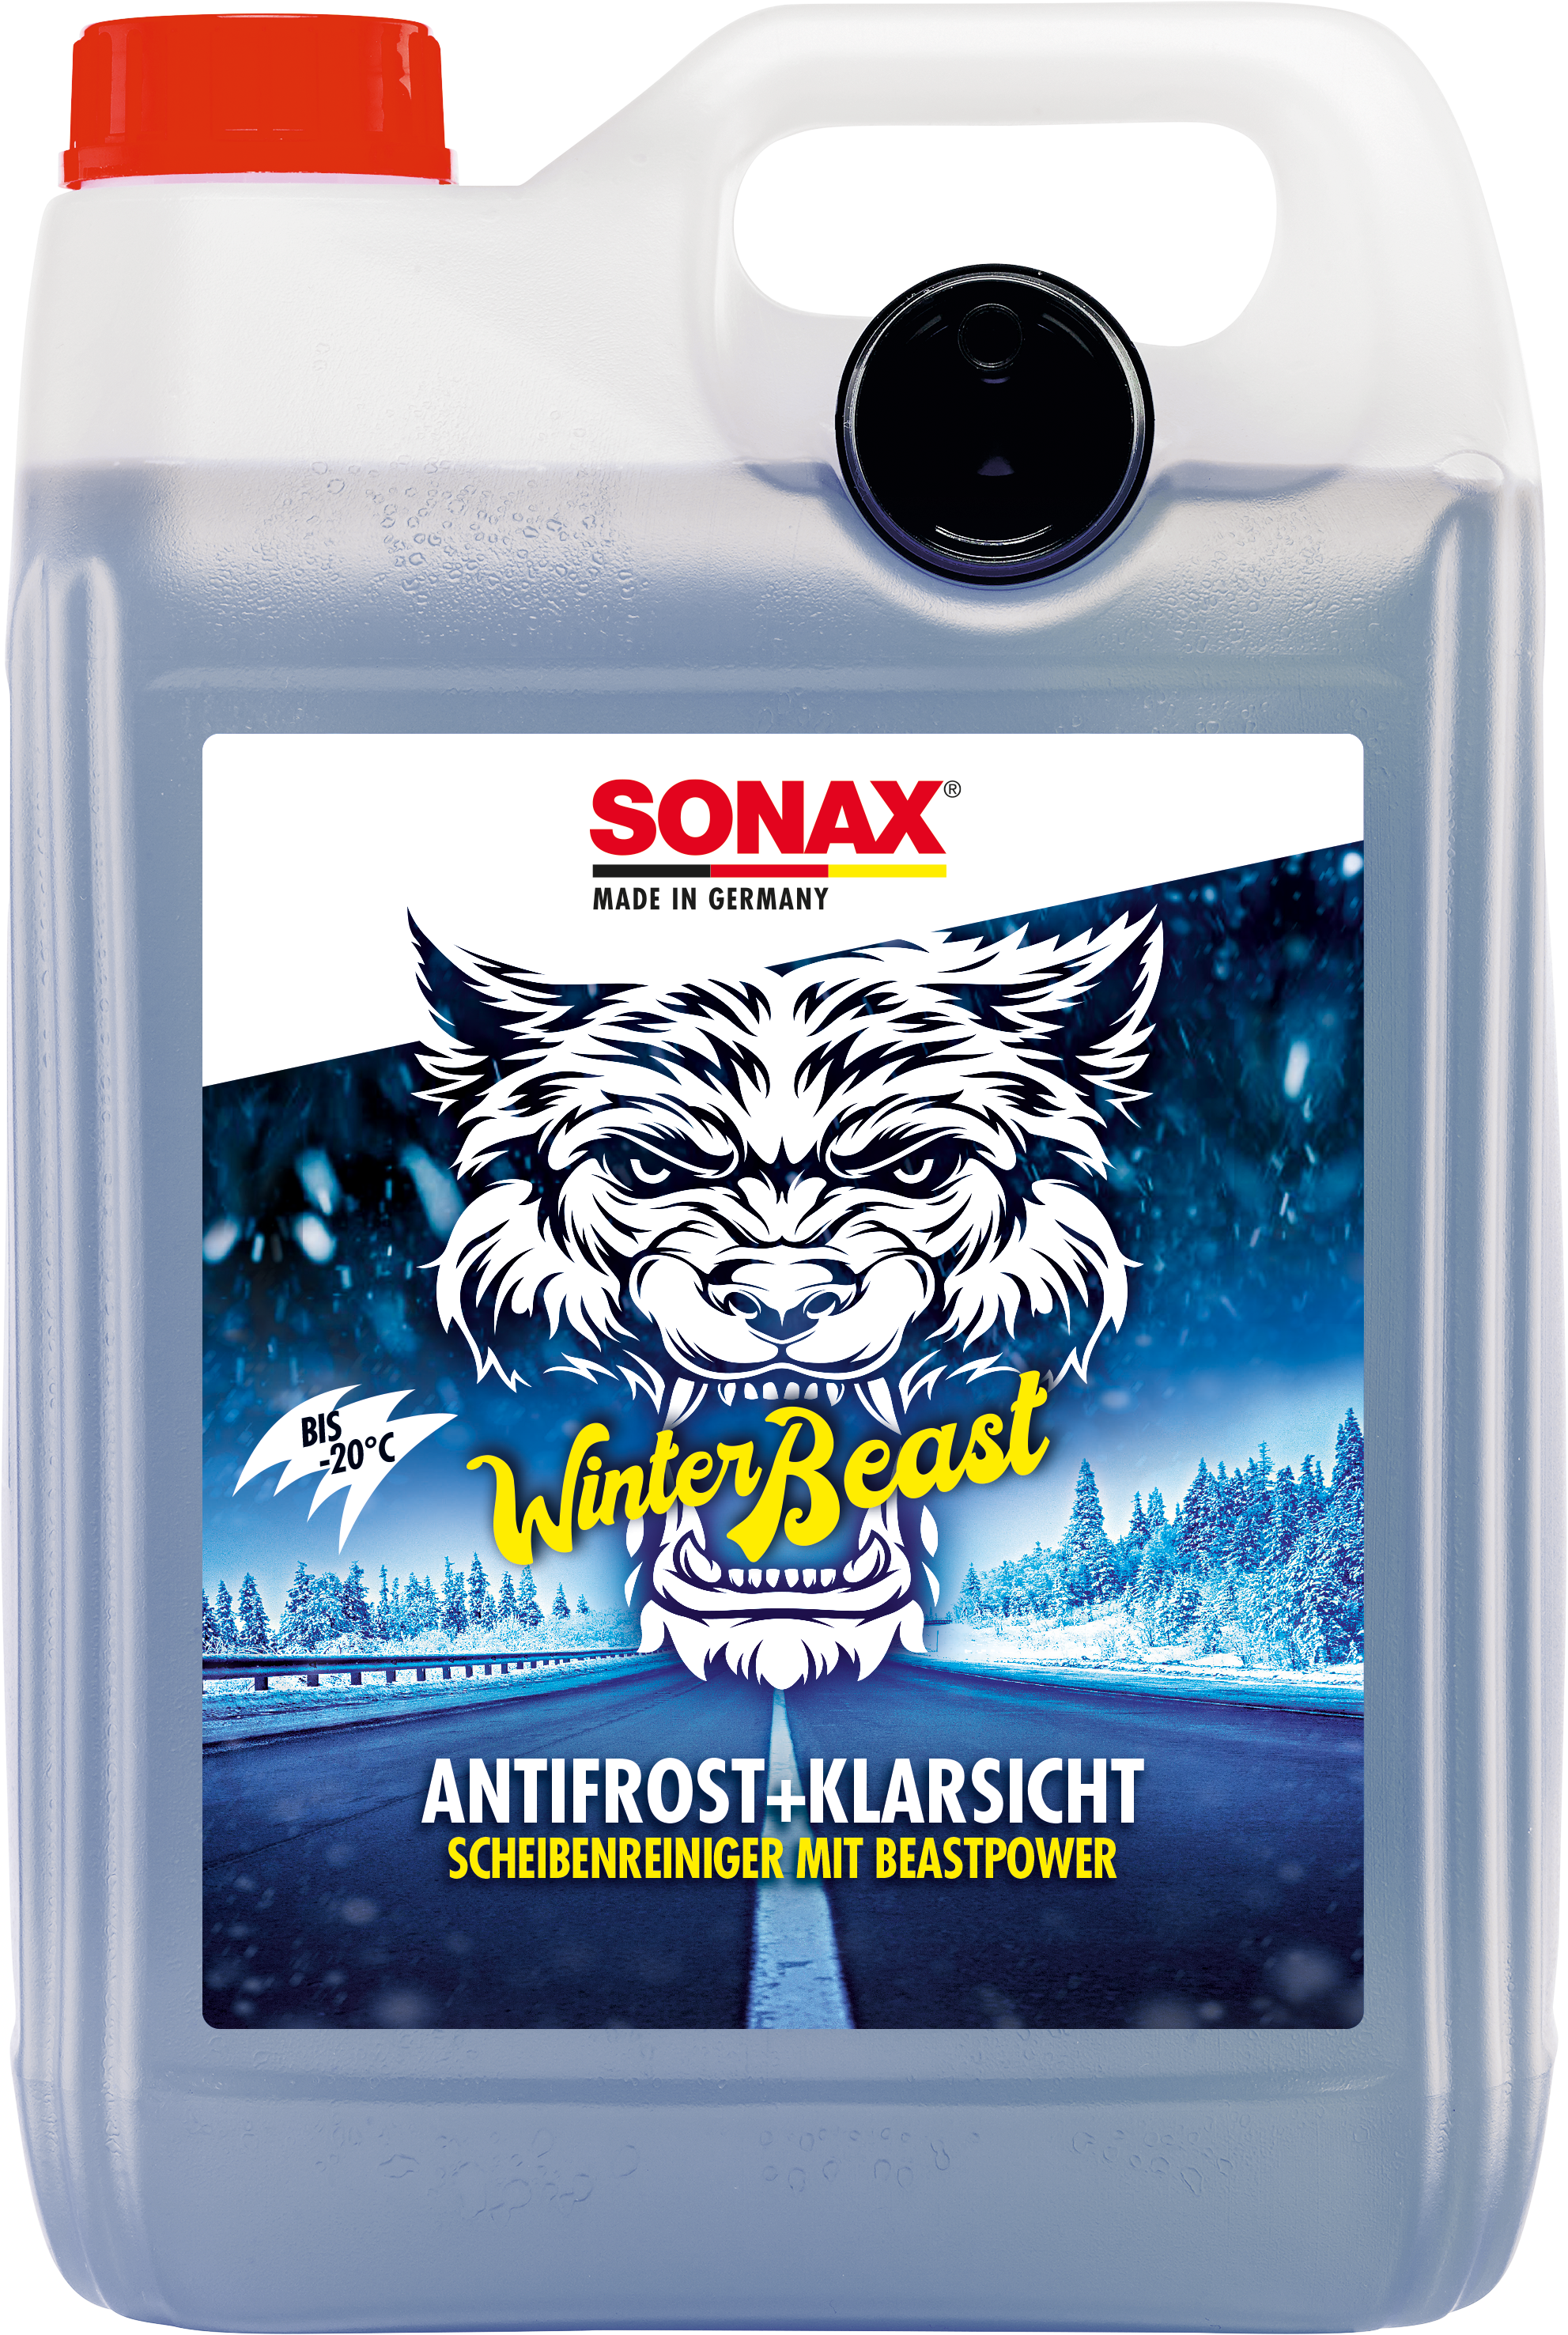 WinterBeast AntiFrost+KlarSicht bis -20 °C - Sonax-AT